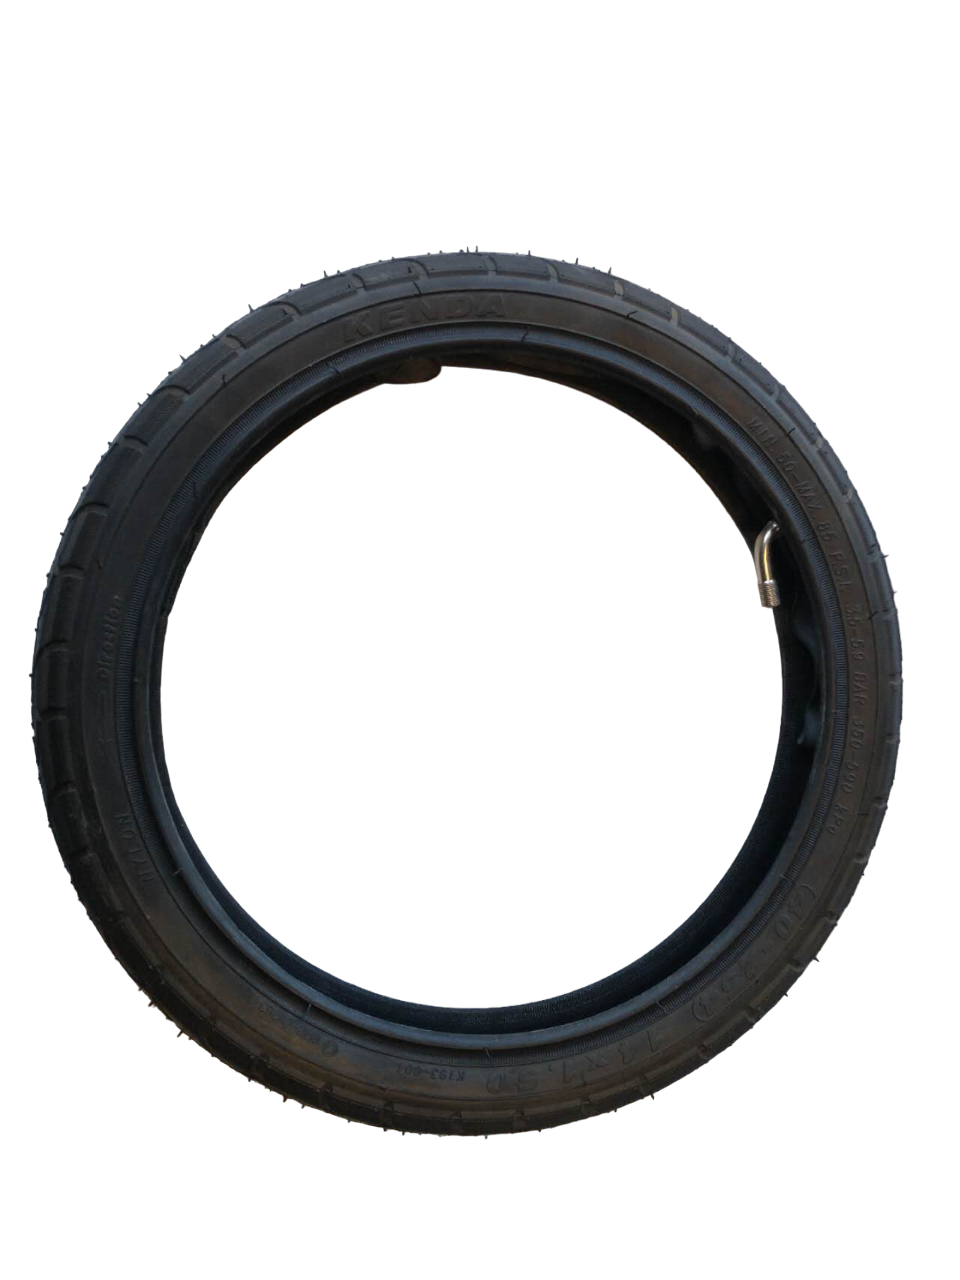 IPS I5 Kenda tire and tube 14 inch x 1.50